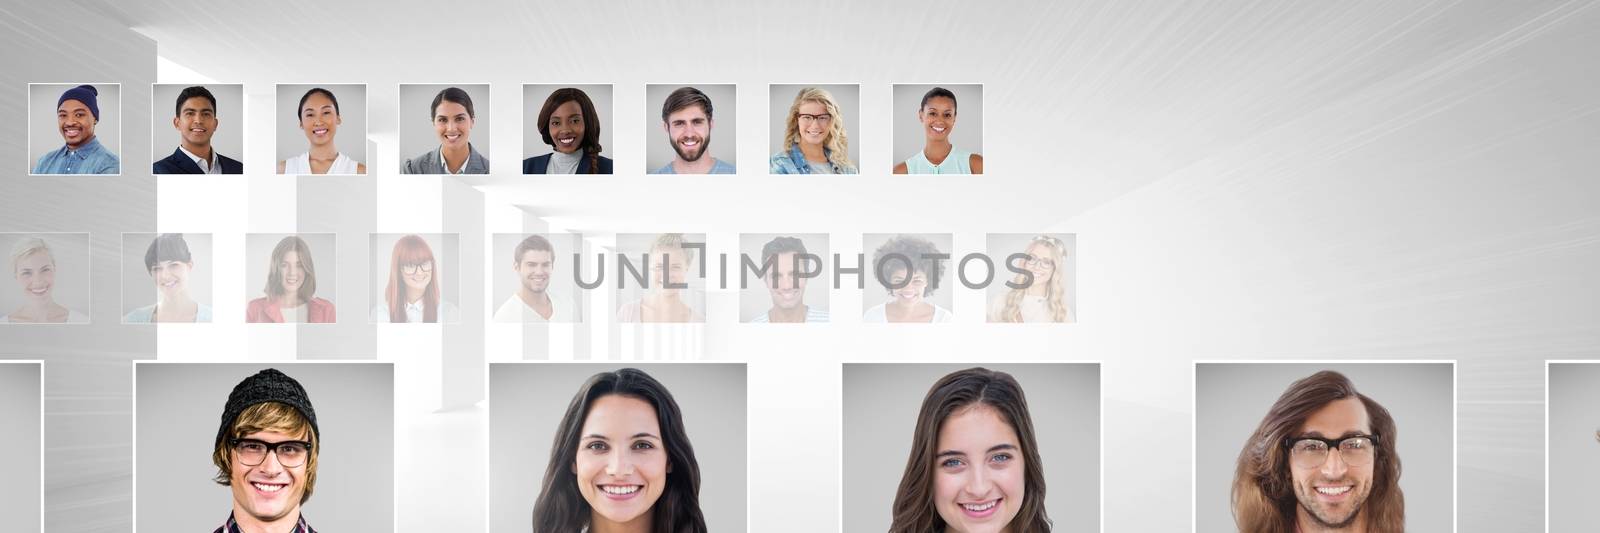 Digital composite of portrait profiles of different people